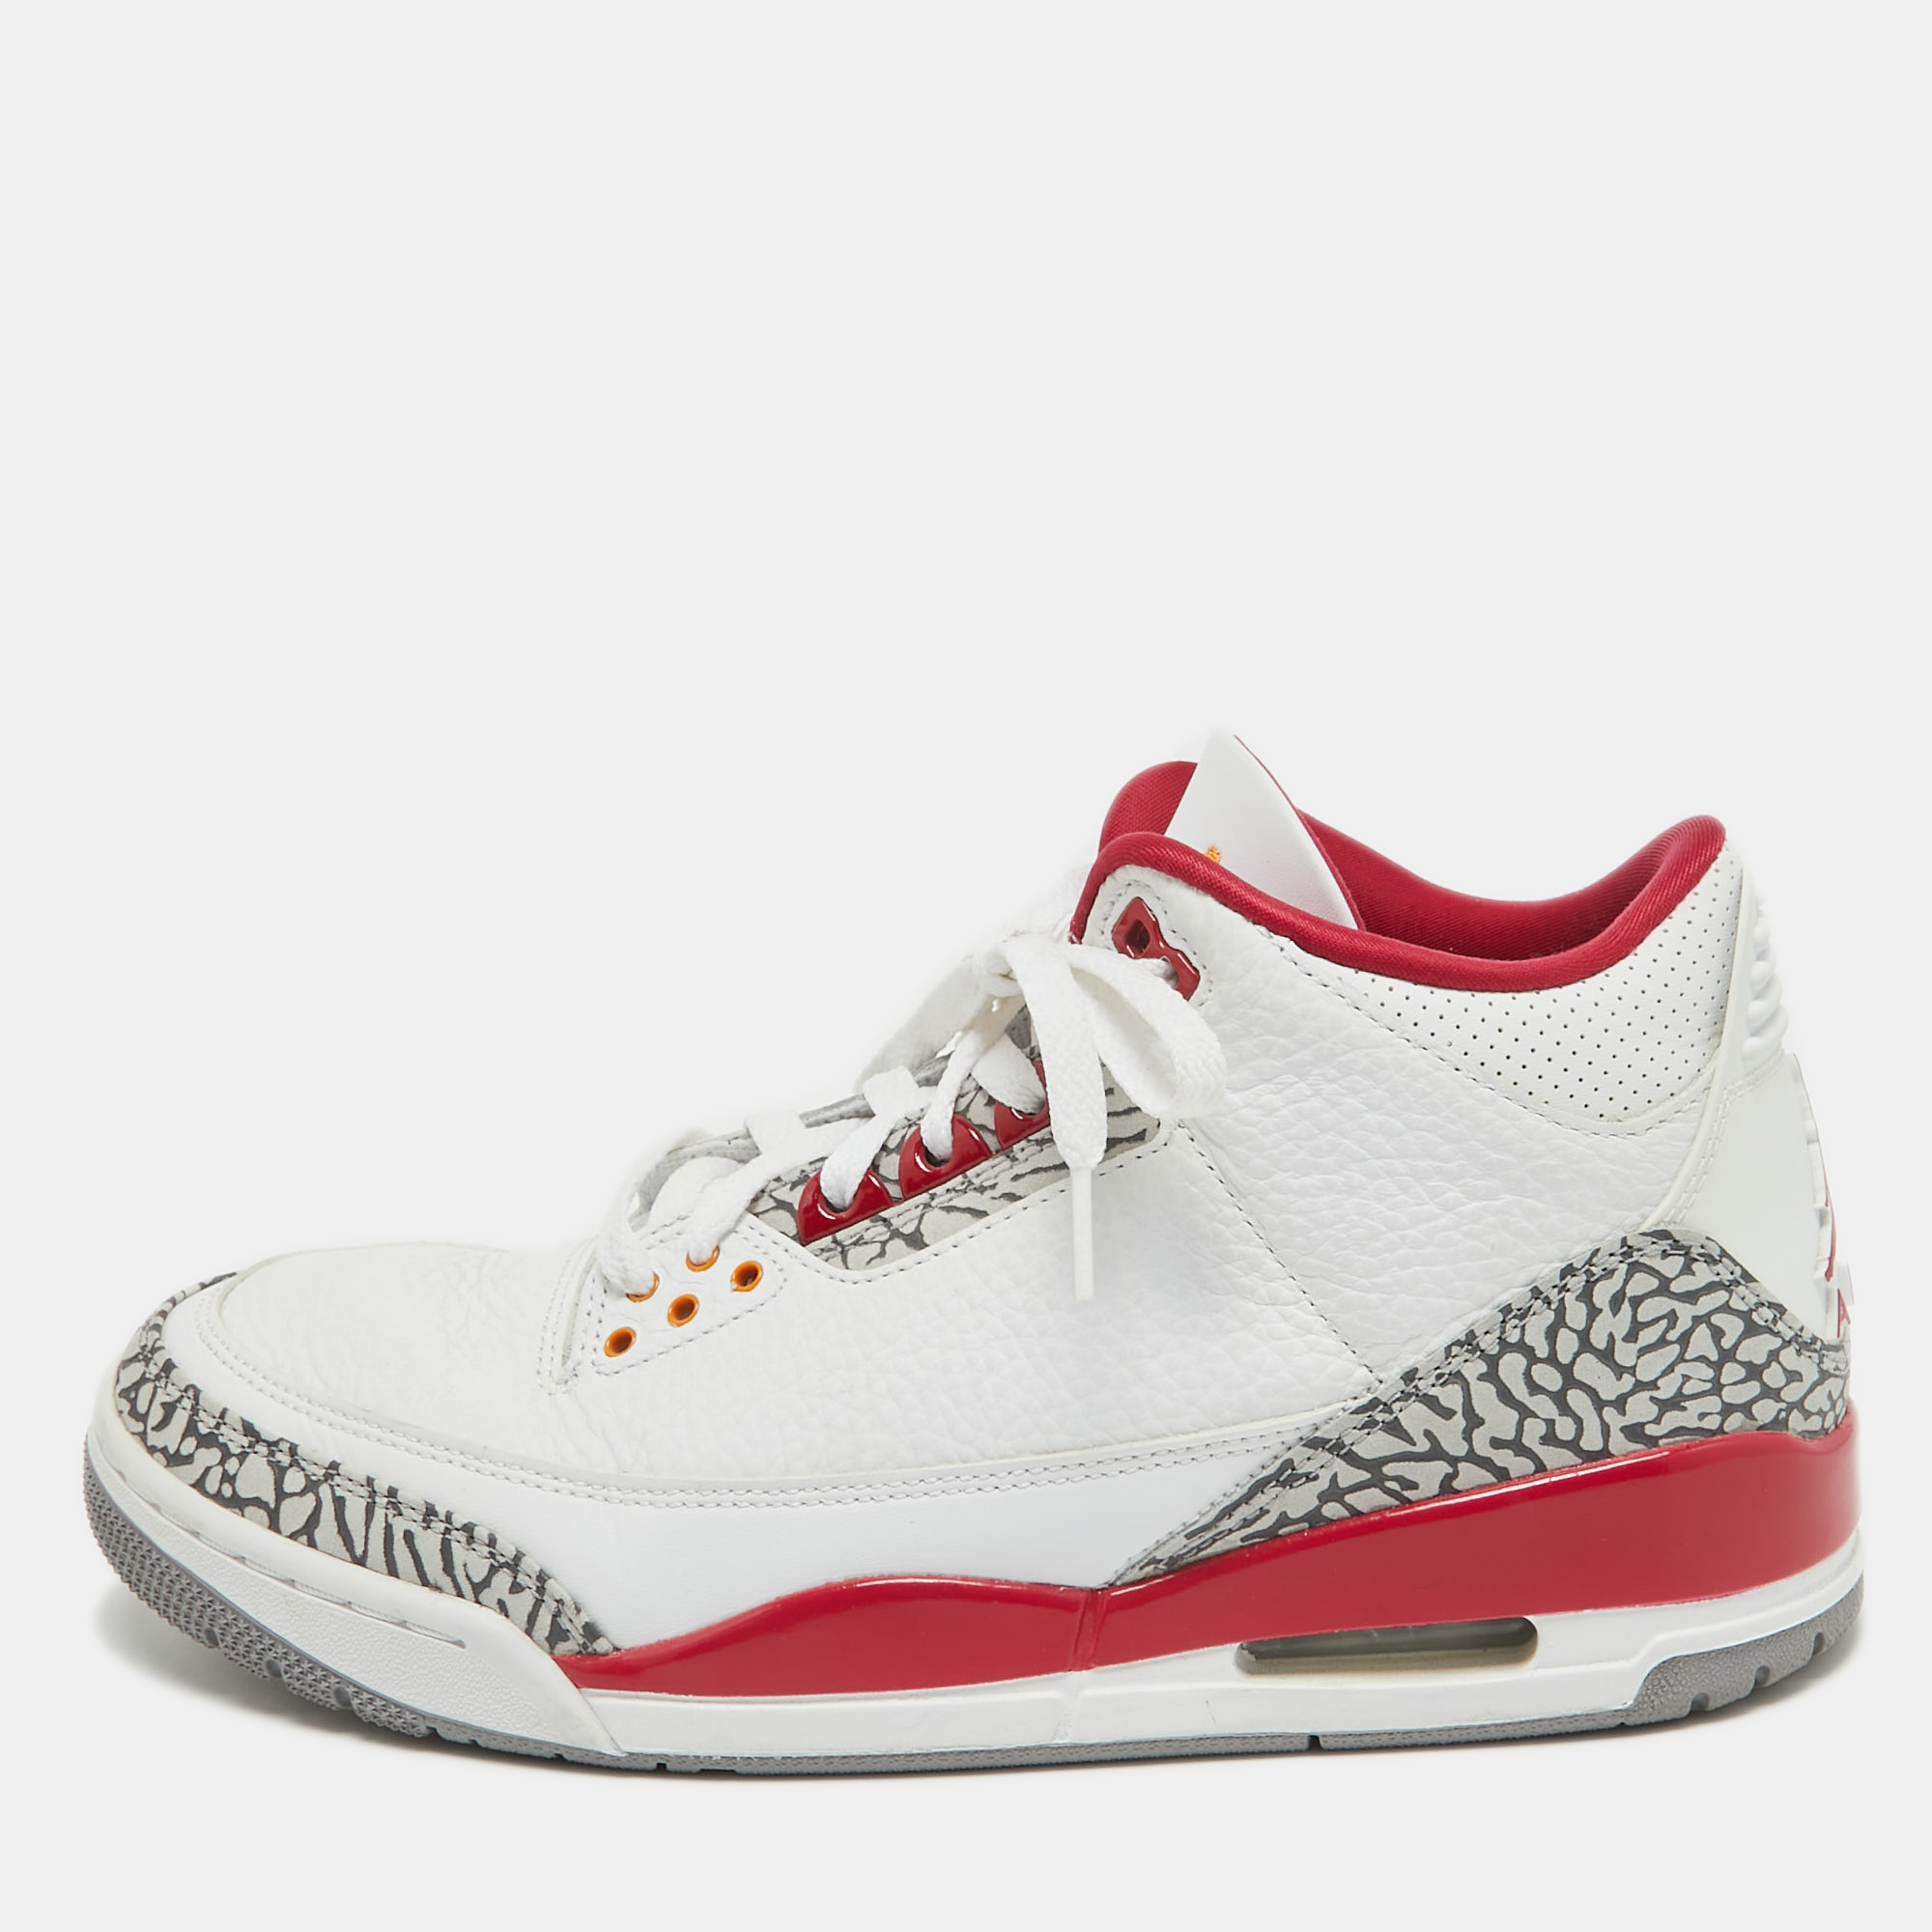 

Air Jordans White/Grey Leather Jordan 3 Retro Cardinal Red Sneakers Size